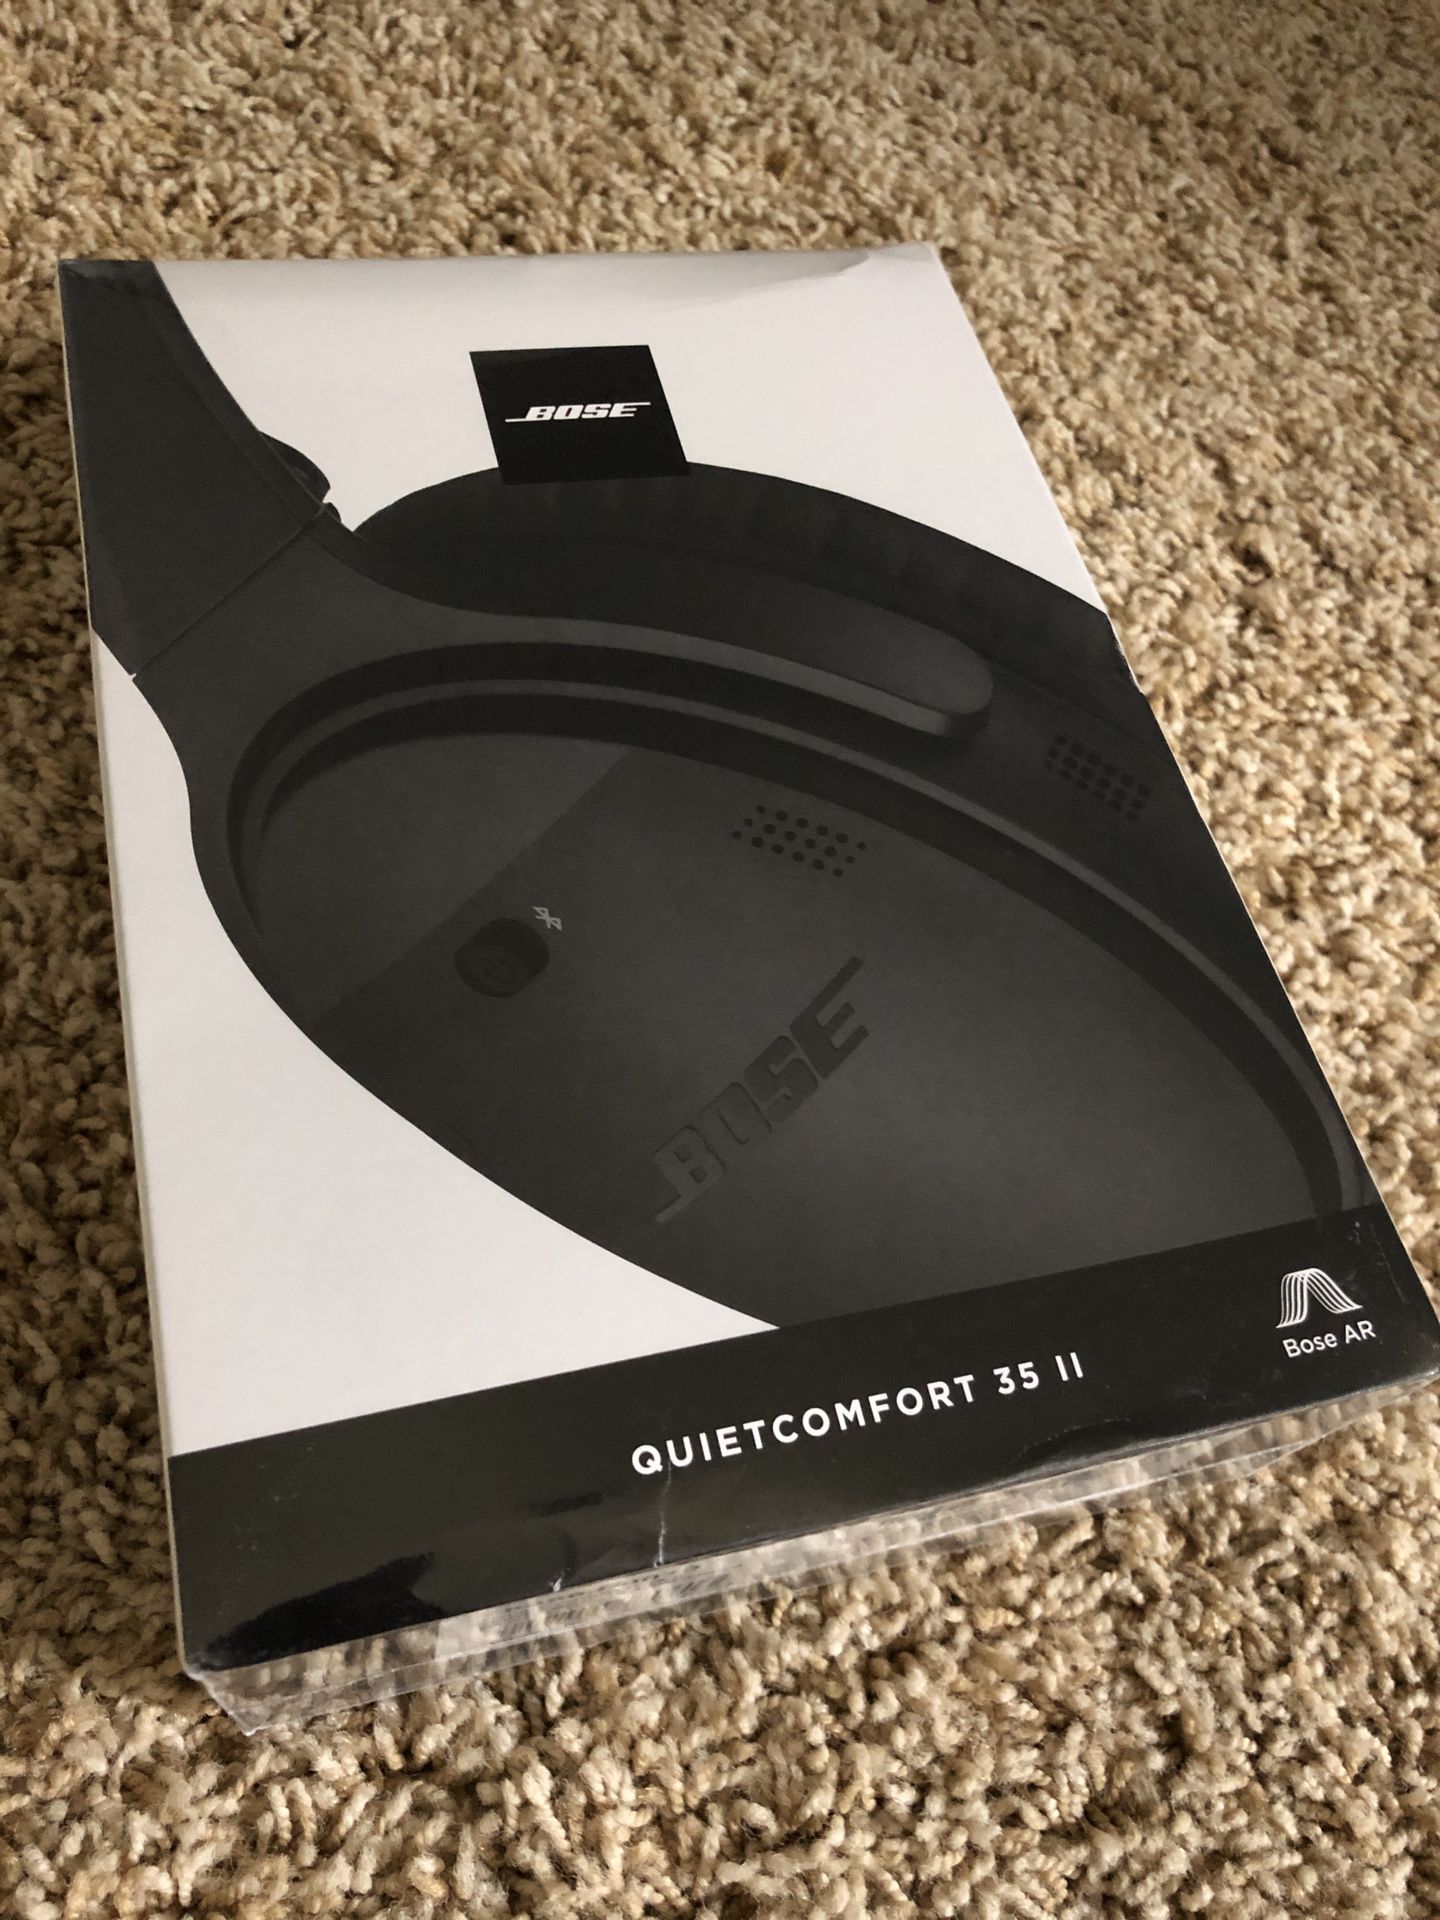 Bose QC35 II Bluetooth Headphones- Brand New & Sealed